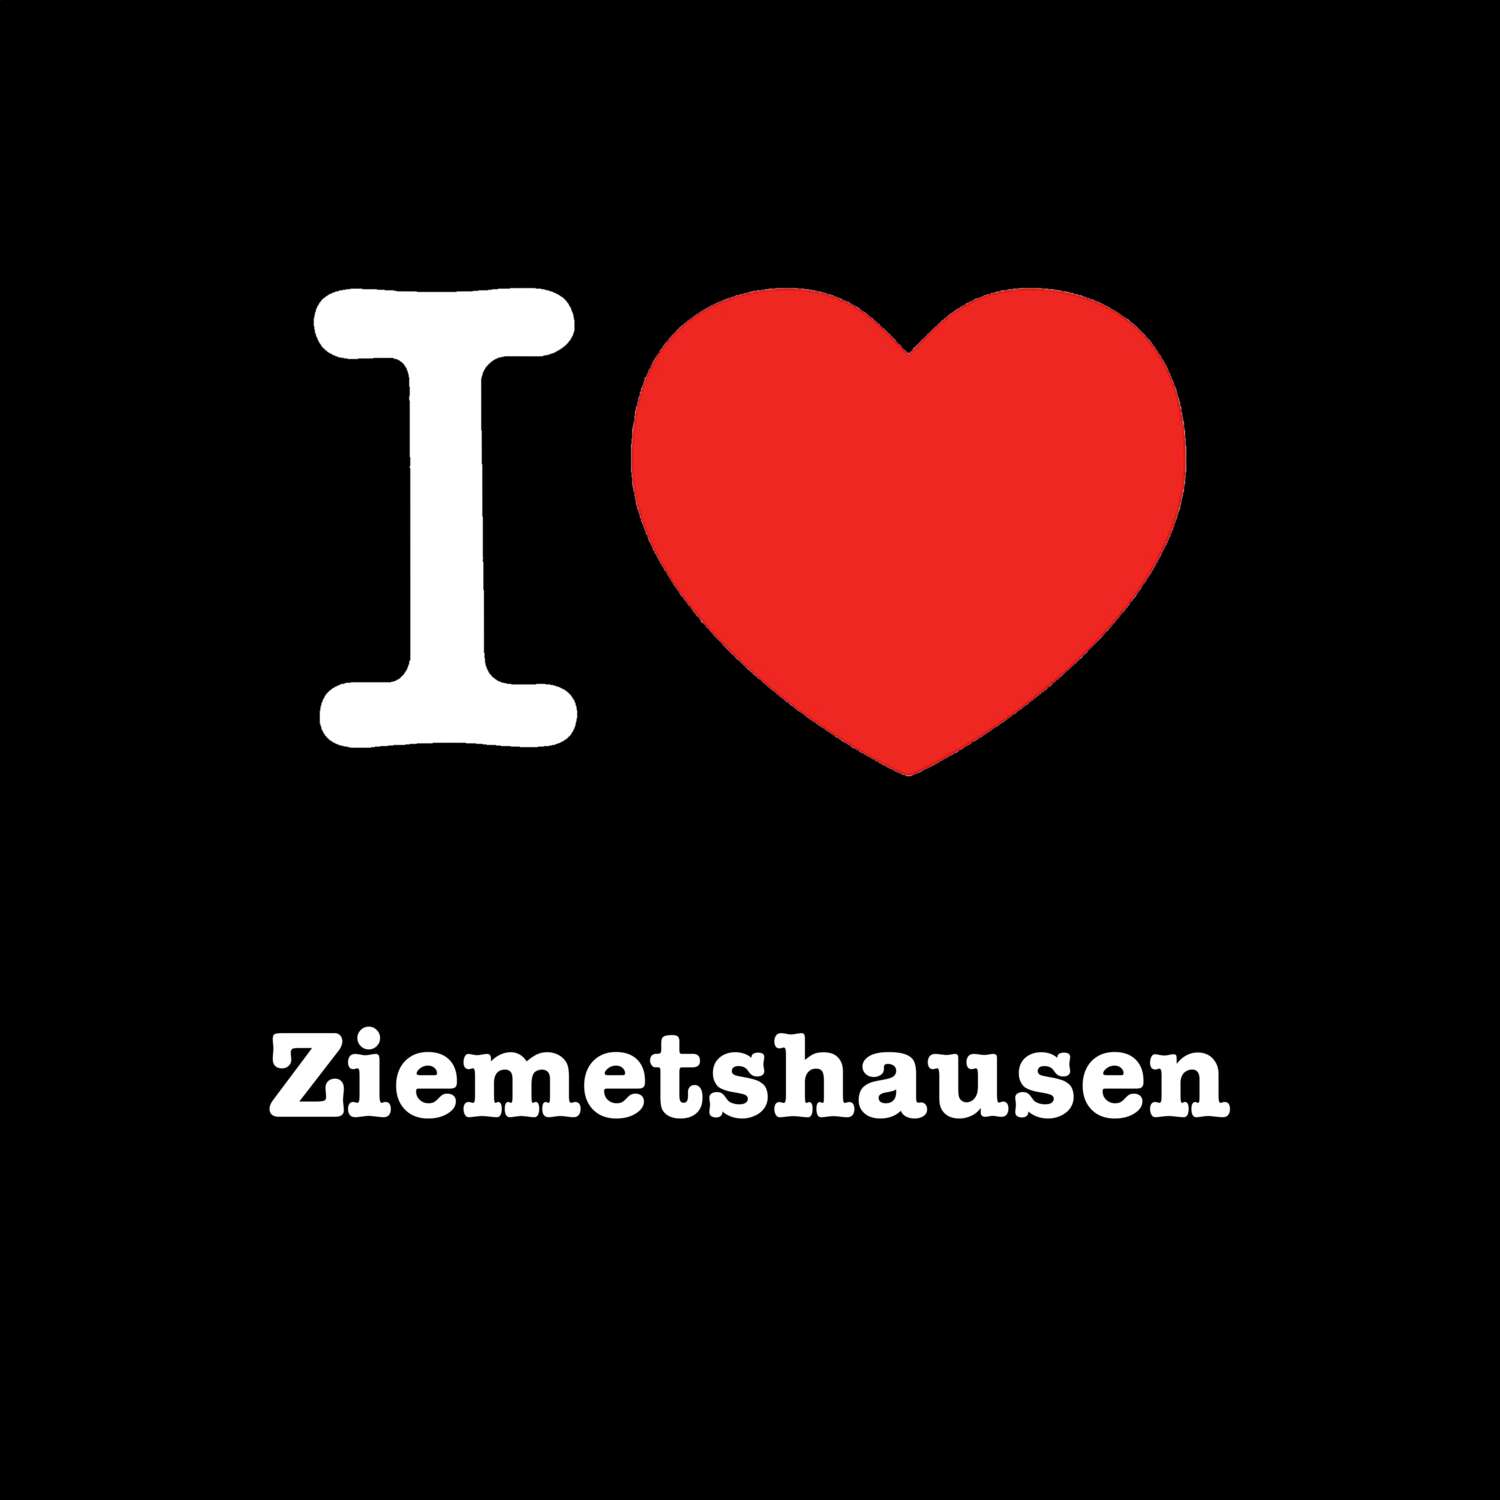 Ziemetshausen T-Shirt »I love«